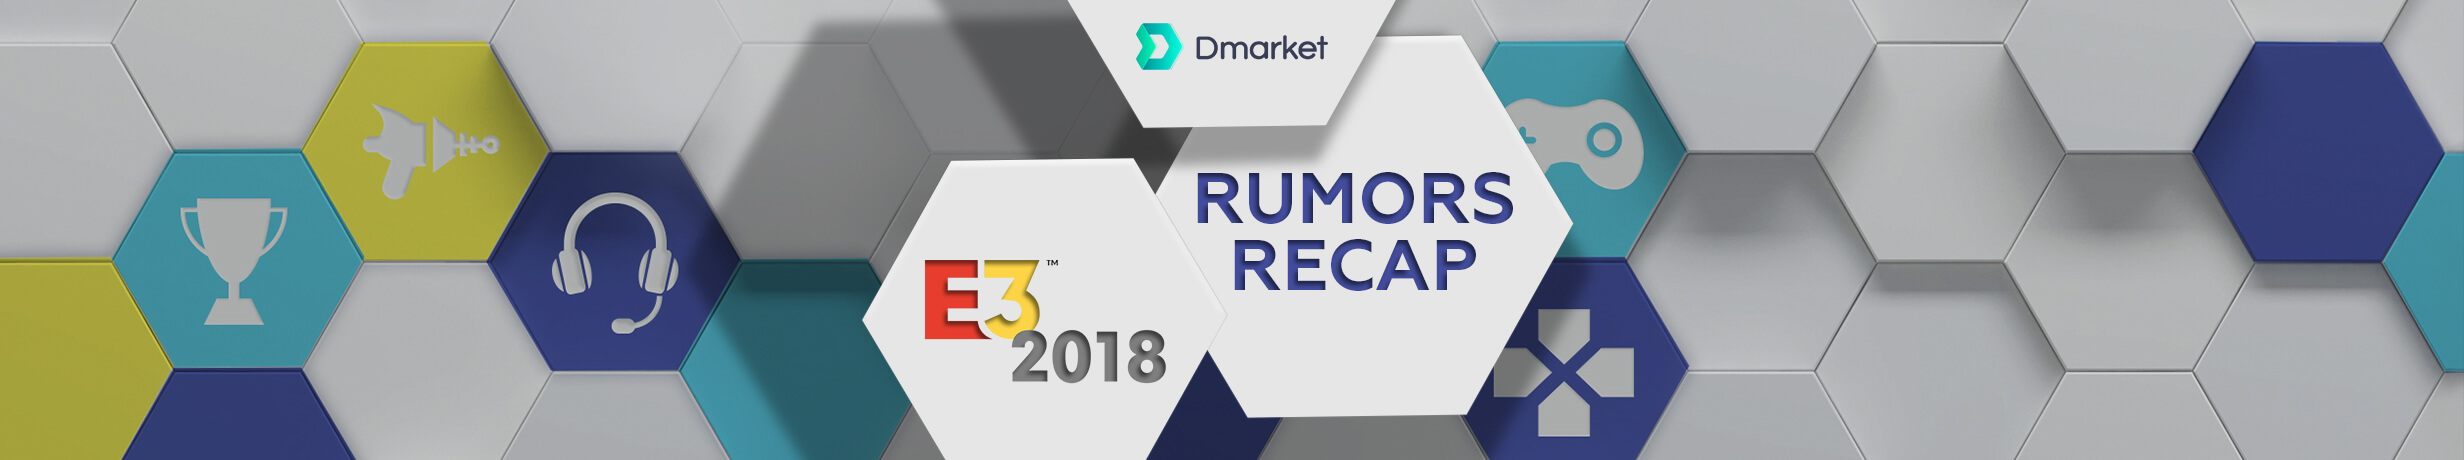 E3 Rumors Recap: What to Expect in 2018